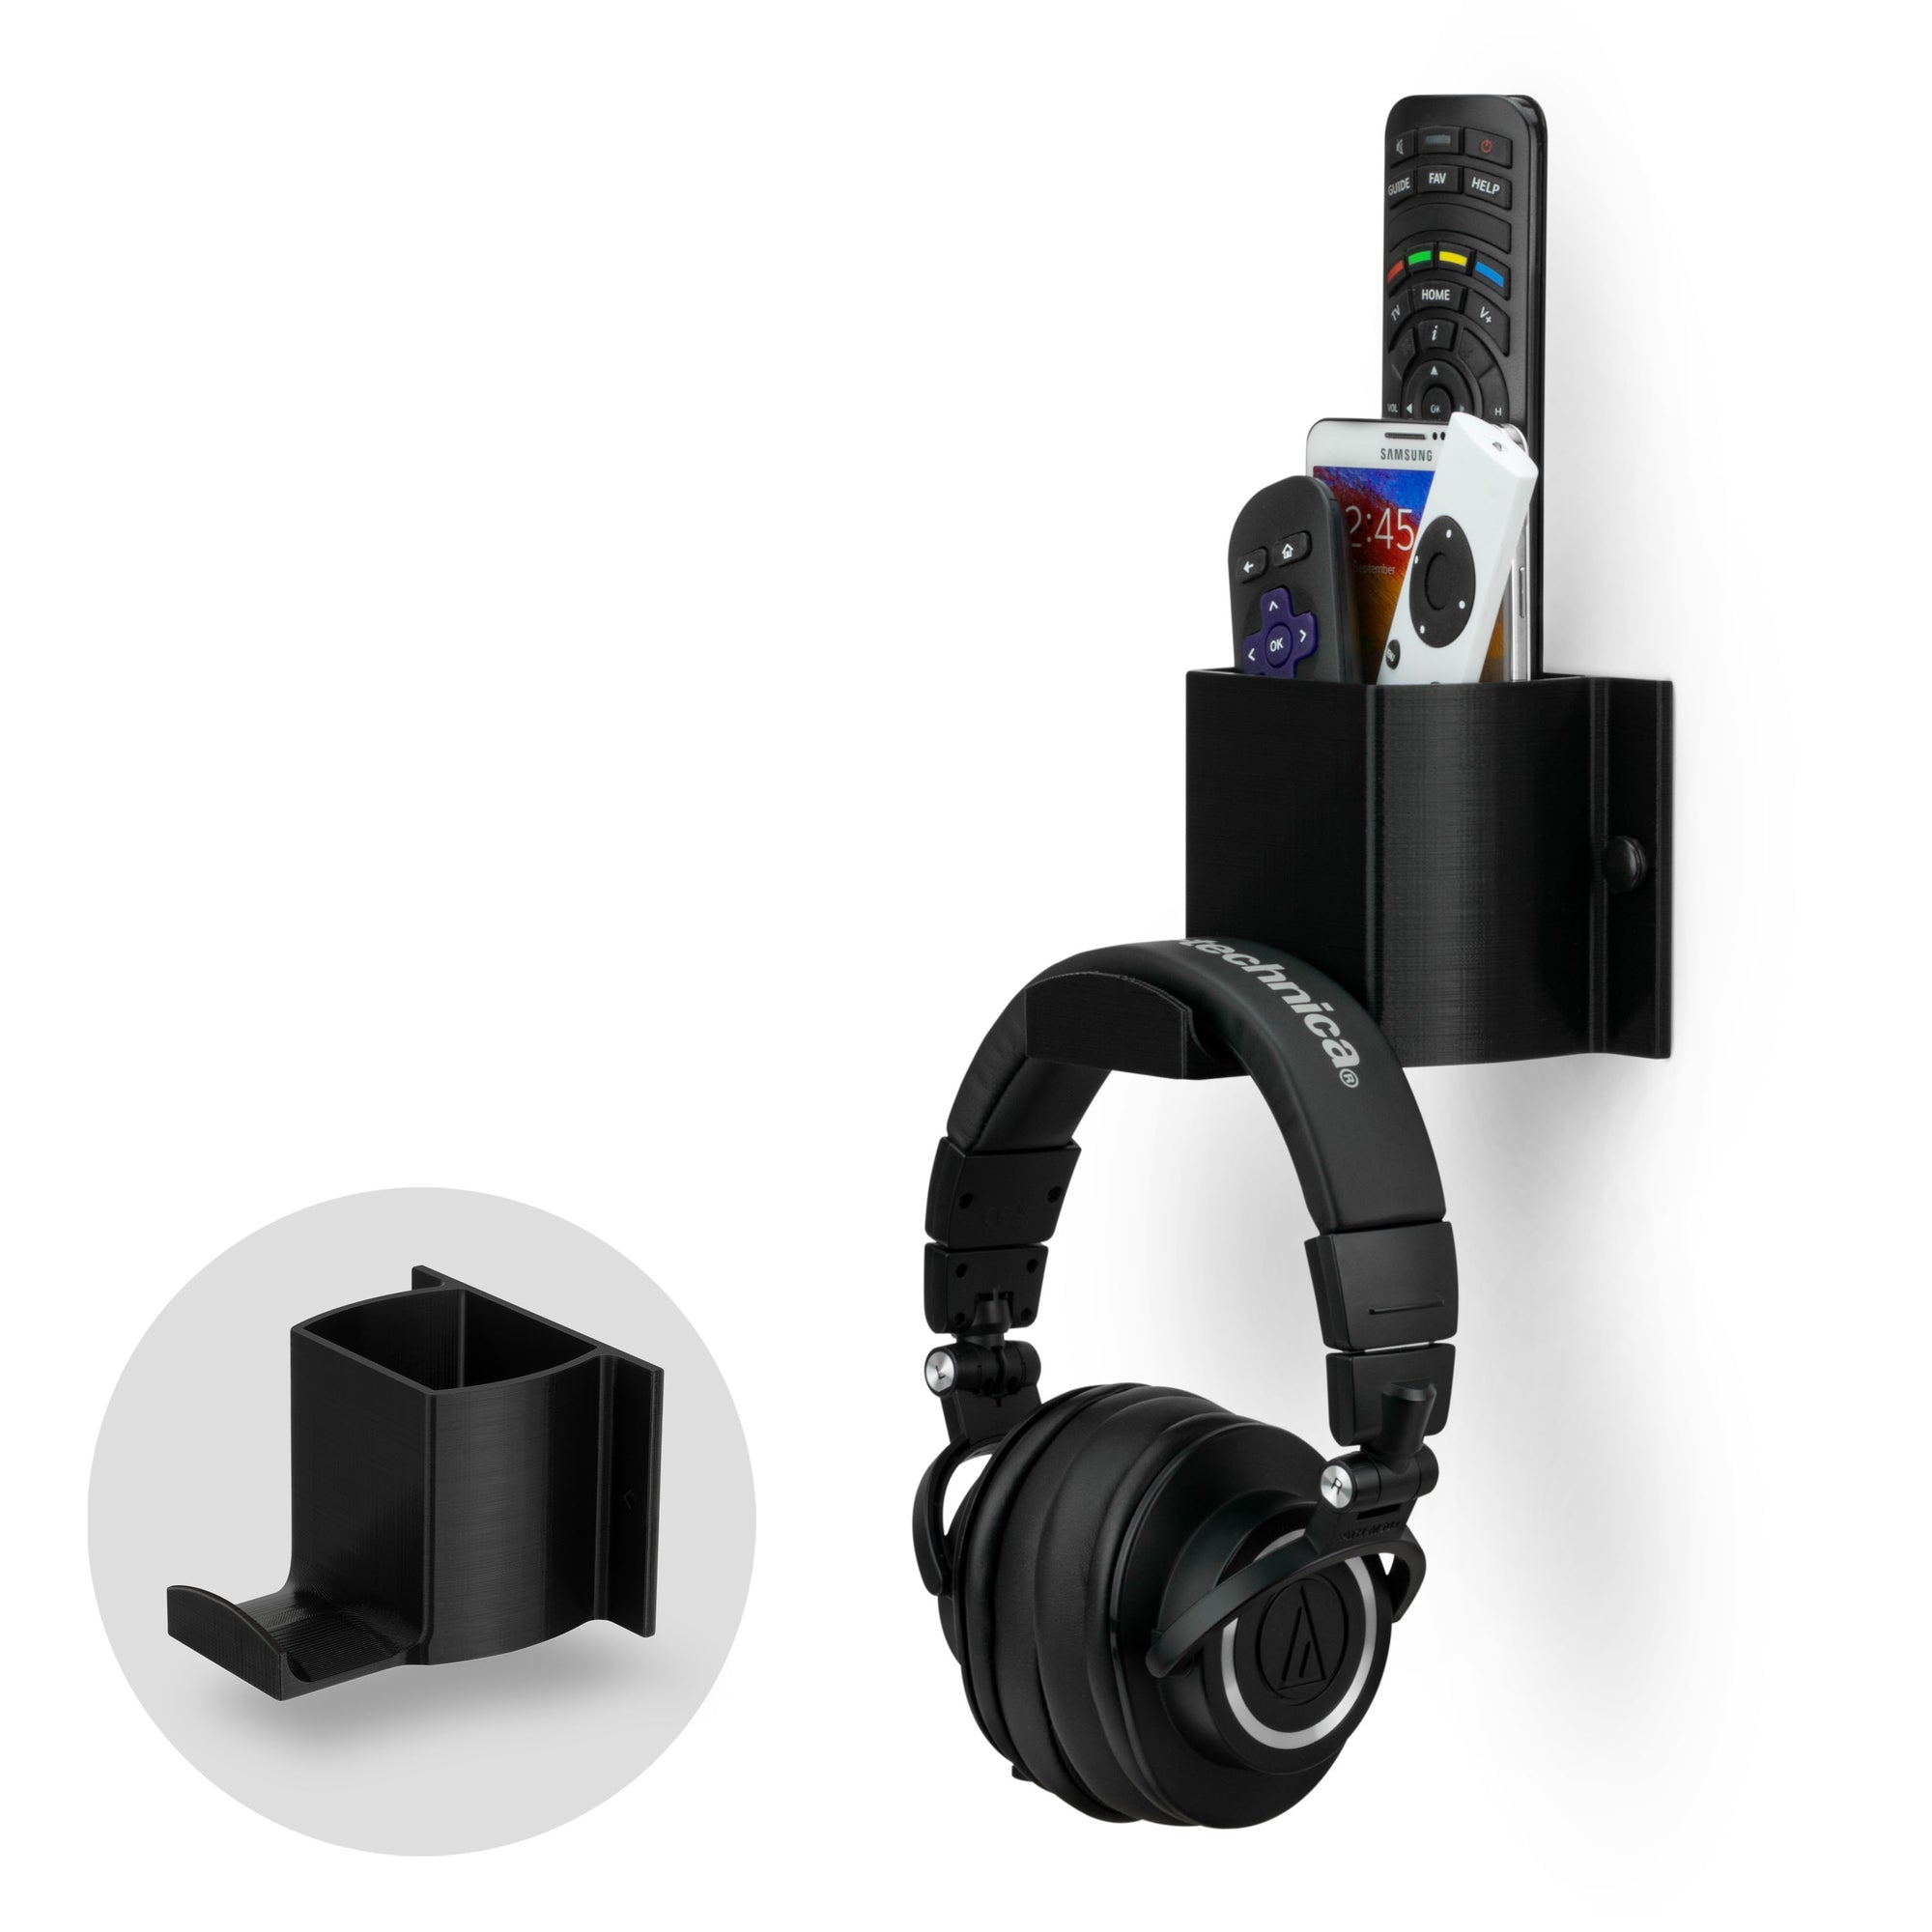 Elephant HP Headphone & TV Remote Control Wall Mount Holder / Phone, Accessories Storage Organiser, Universal Headset Hanger